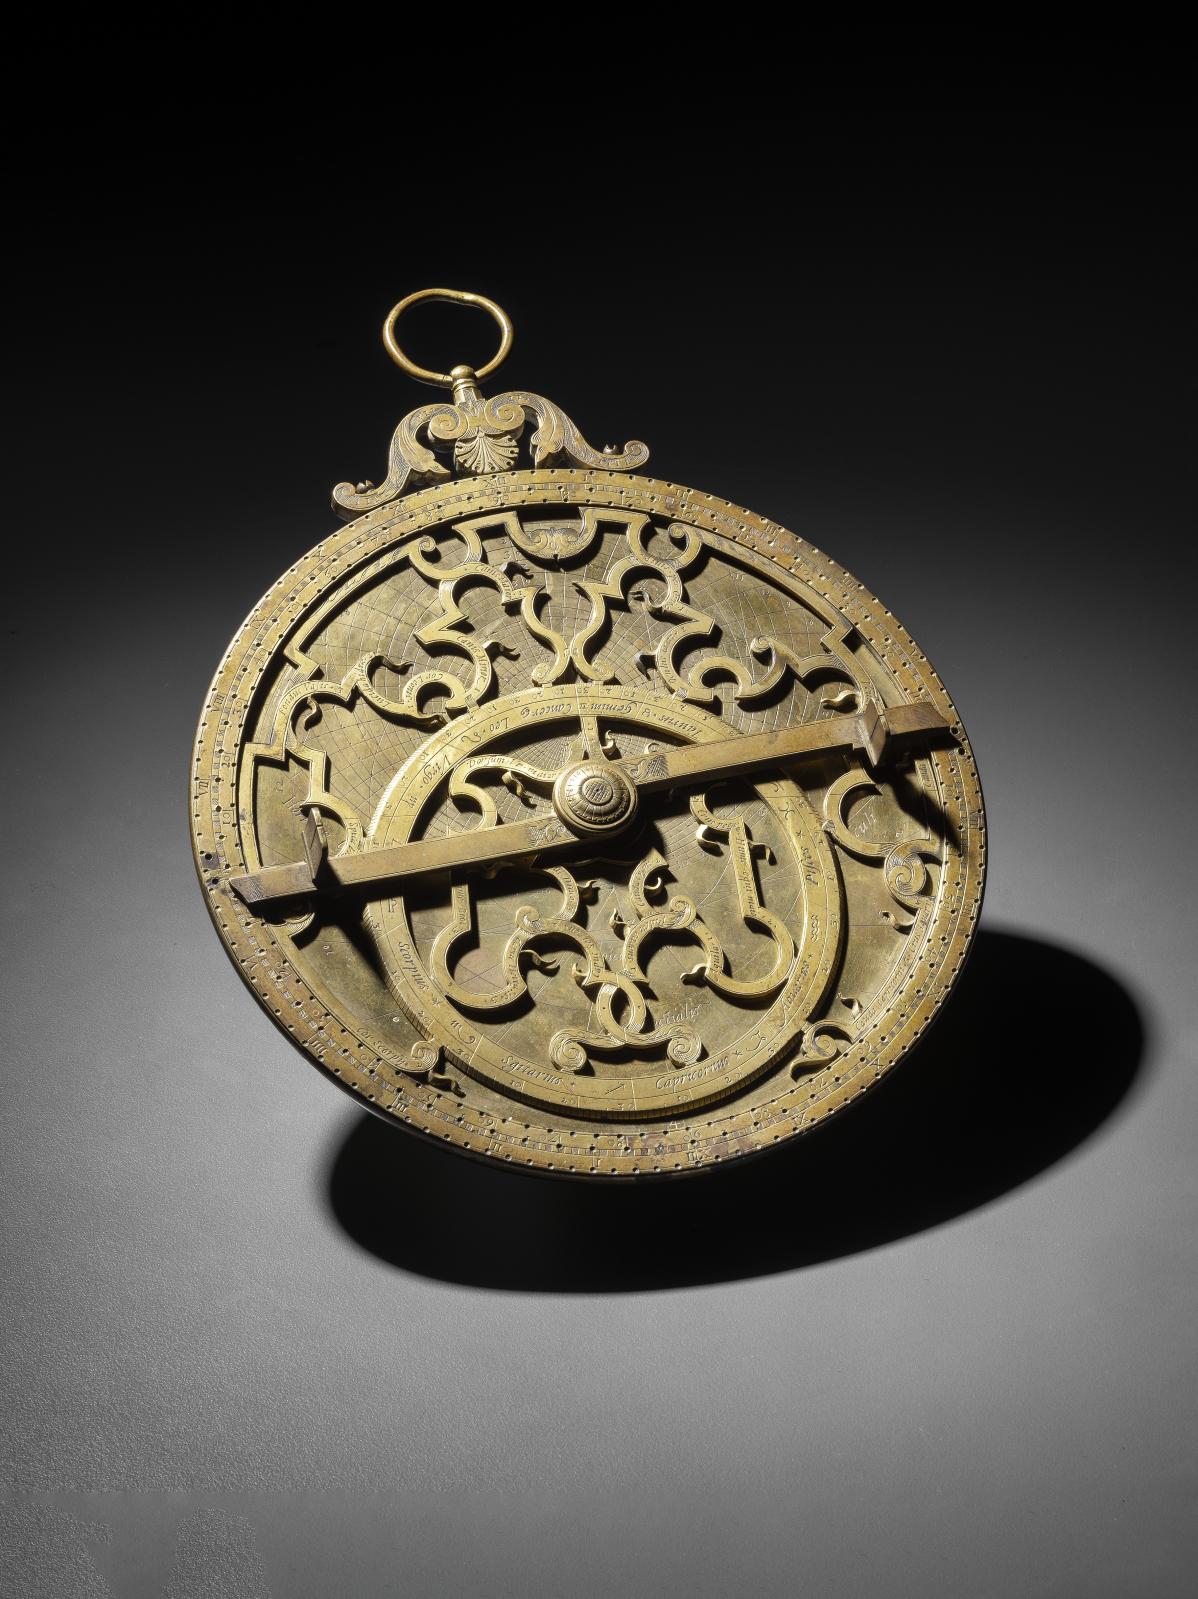 A Beautiful Renaissance Astrolabe